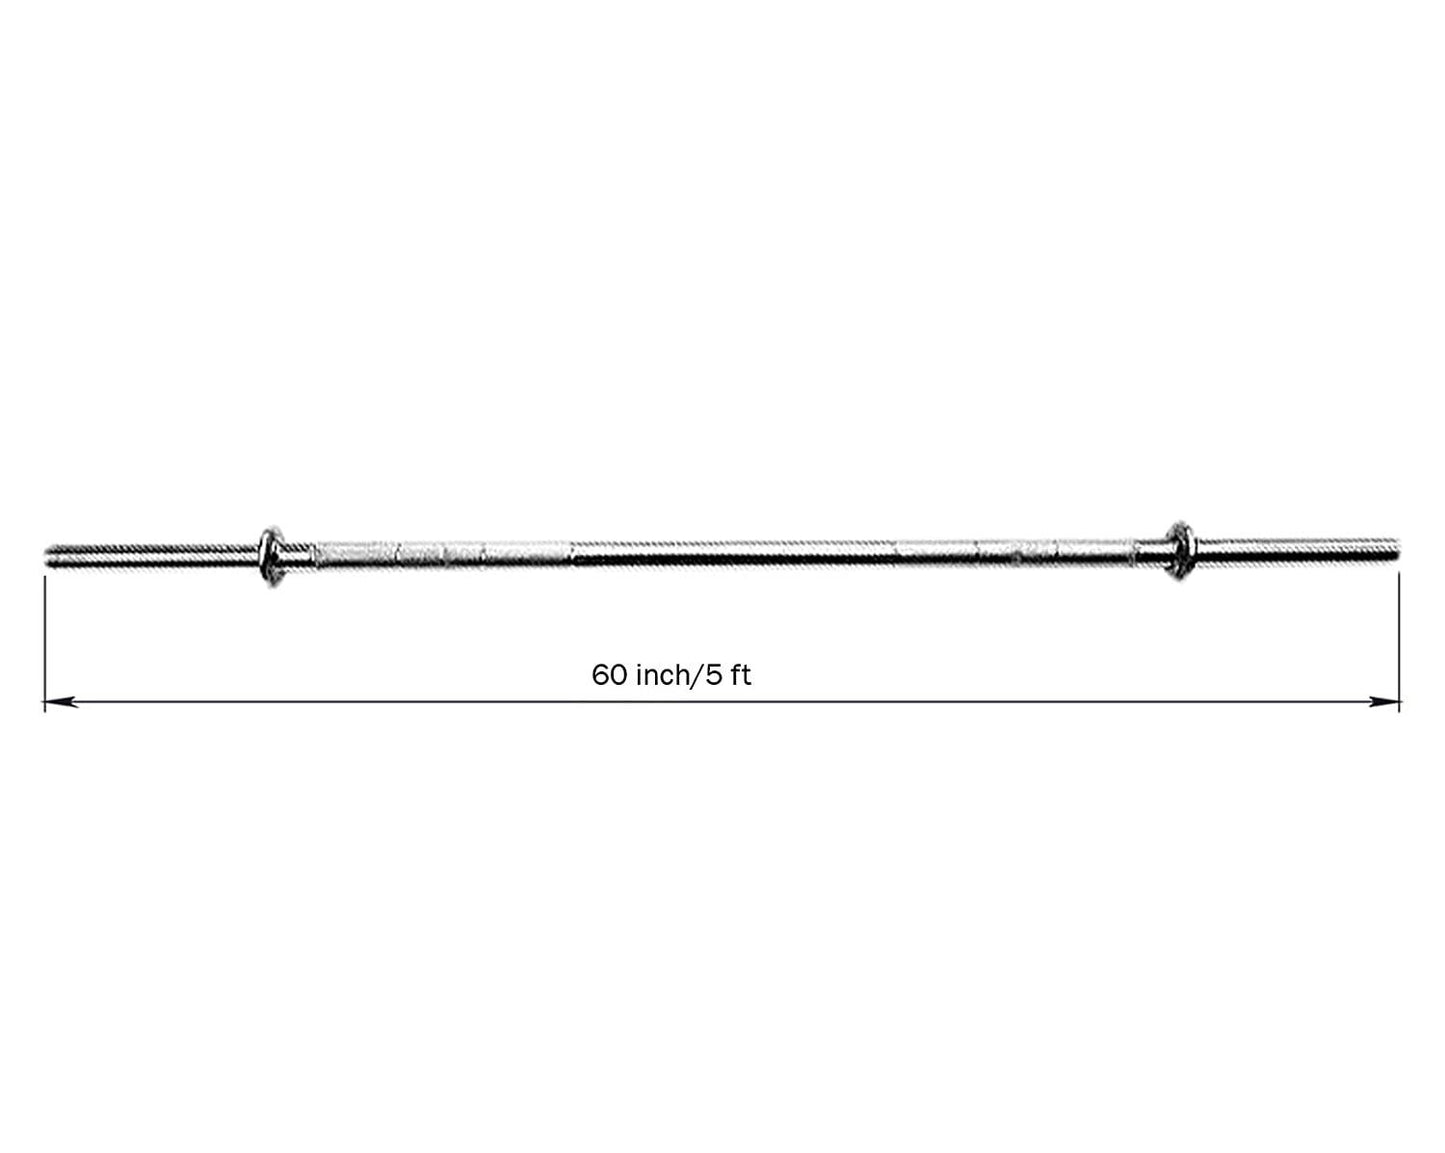 Prokick 5 ft (60 inch) Straight Bar Bell Rod - Best Price online Prokicksports.com